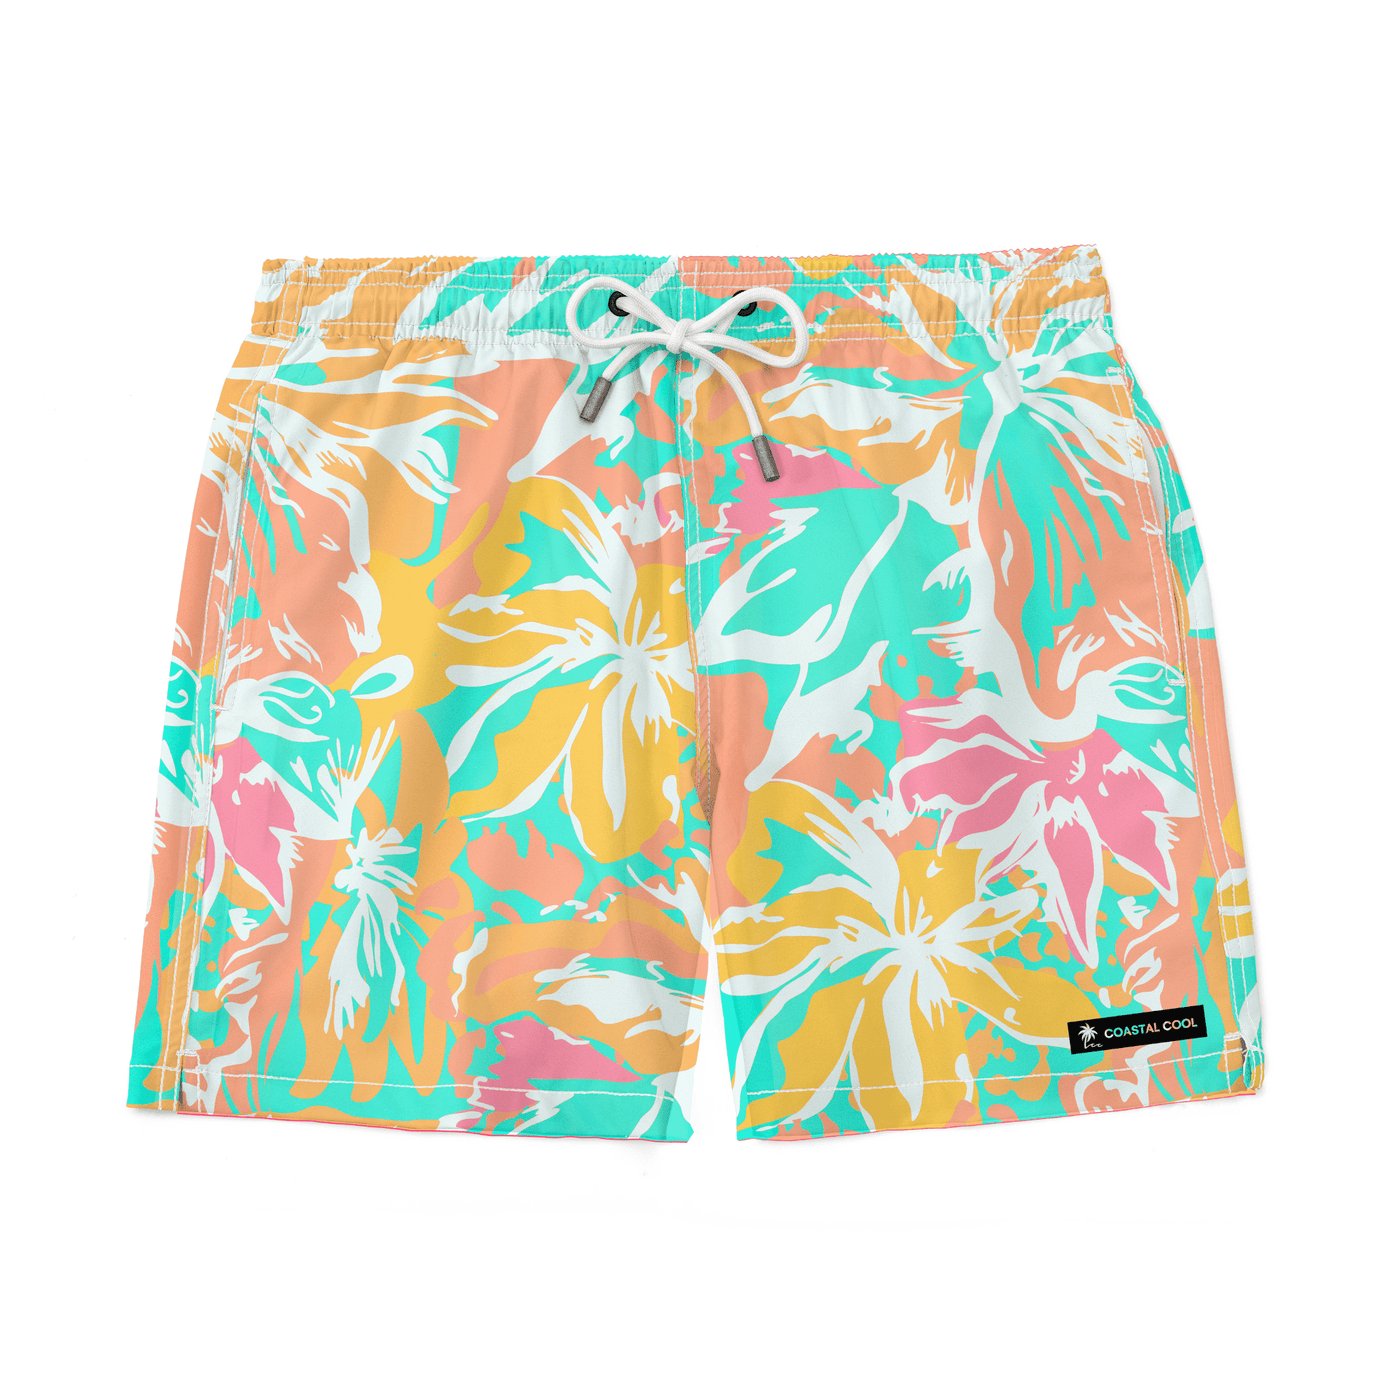 Bora Bora Swim Trunks - Coastal Cool - Swimwear and Beachwear - Recycled fabrics